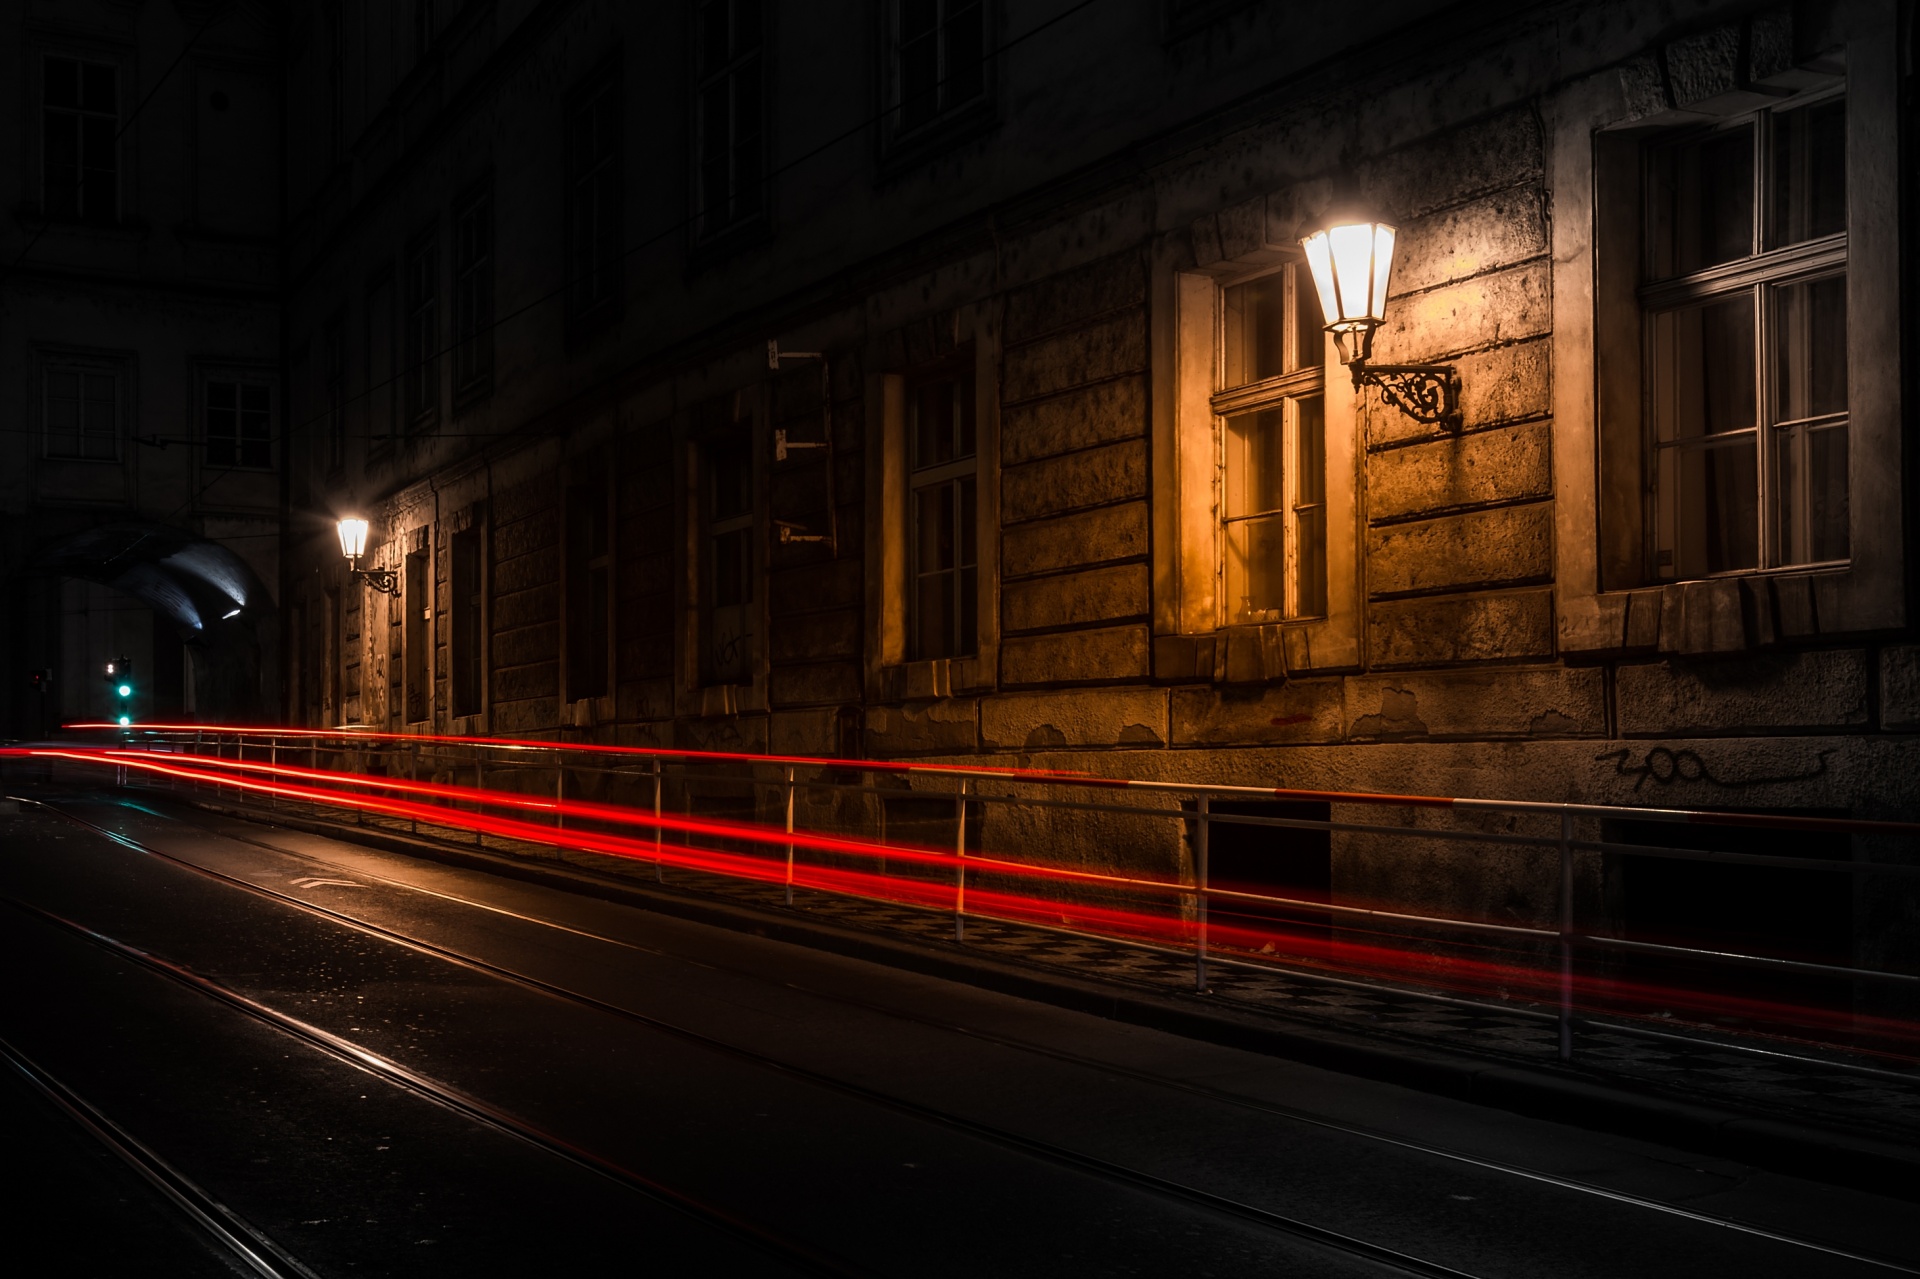 Long exposure shot of the illuminated cobbled street